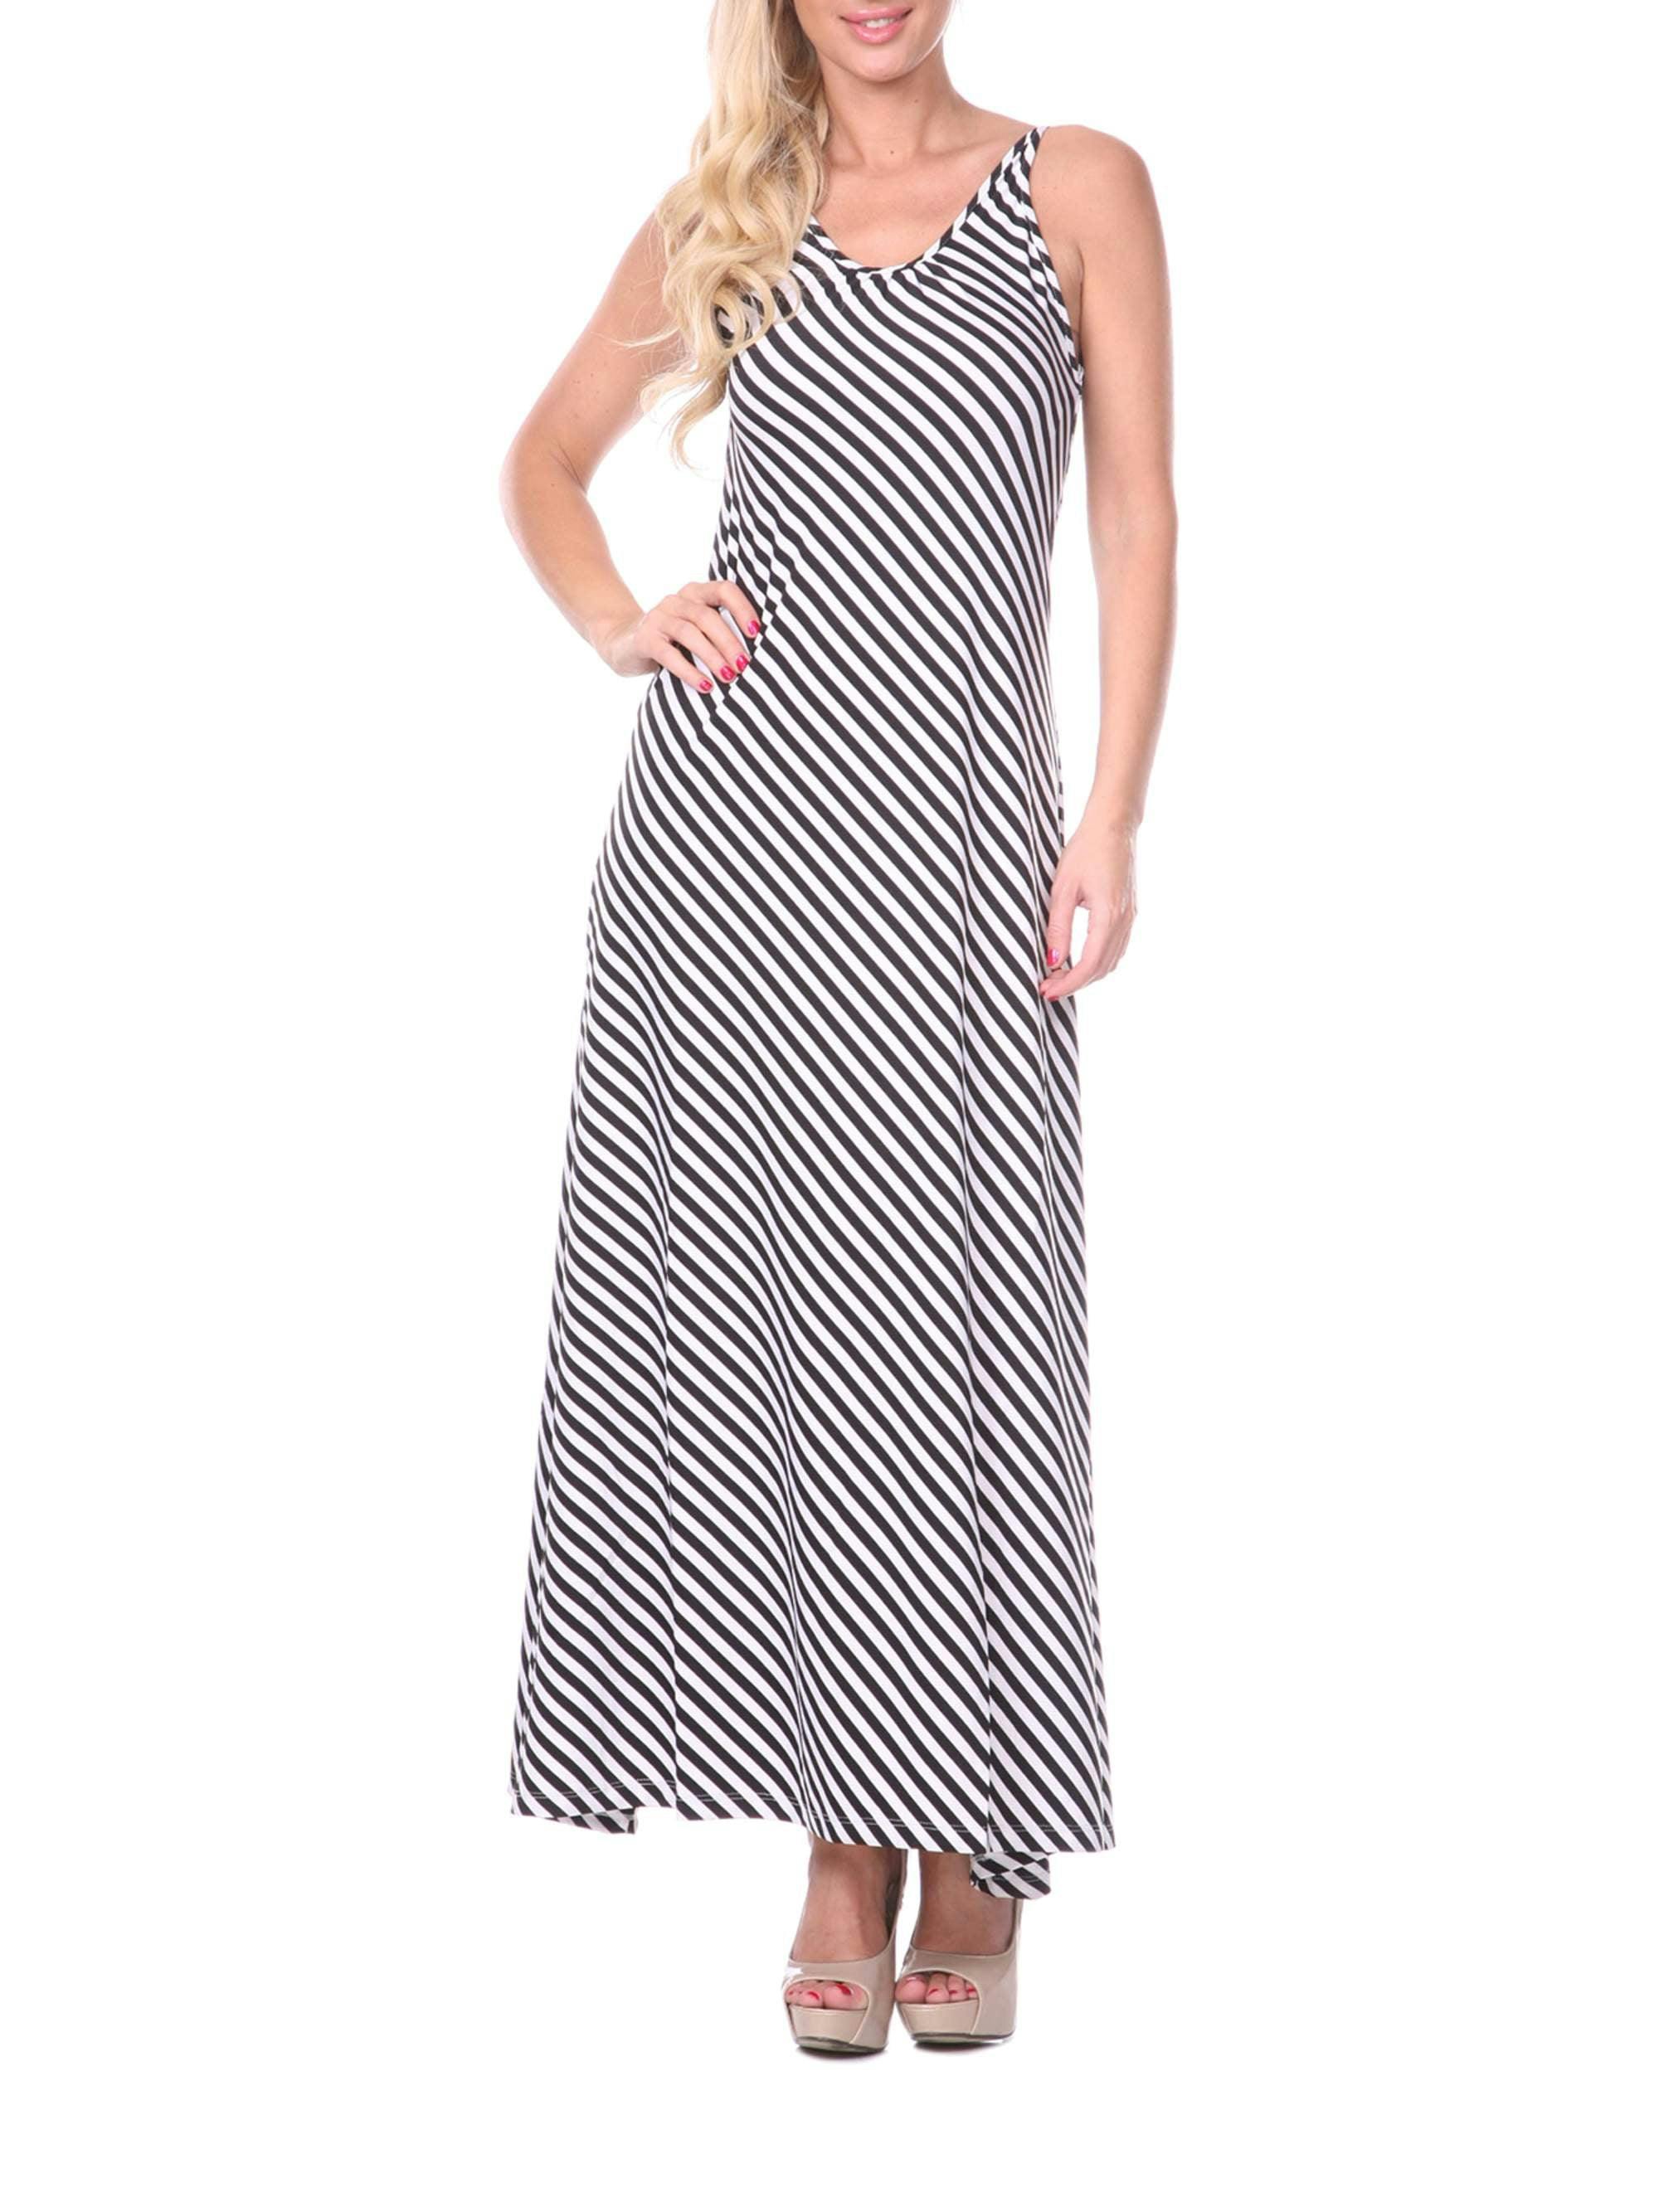 Elegant Striped Polyester Maxi Dress with Backless Design and Adjustable Straps - Black